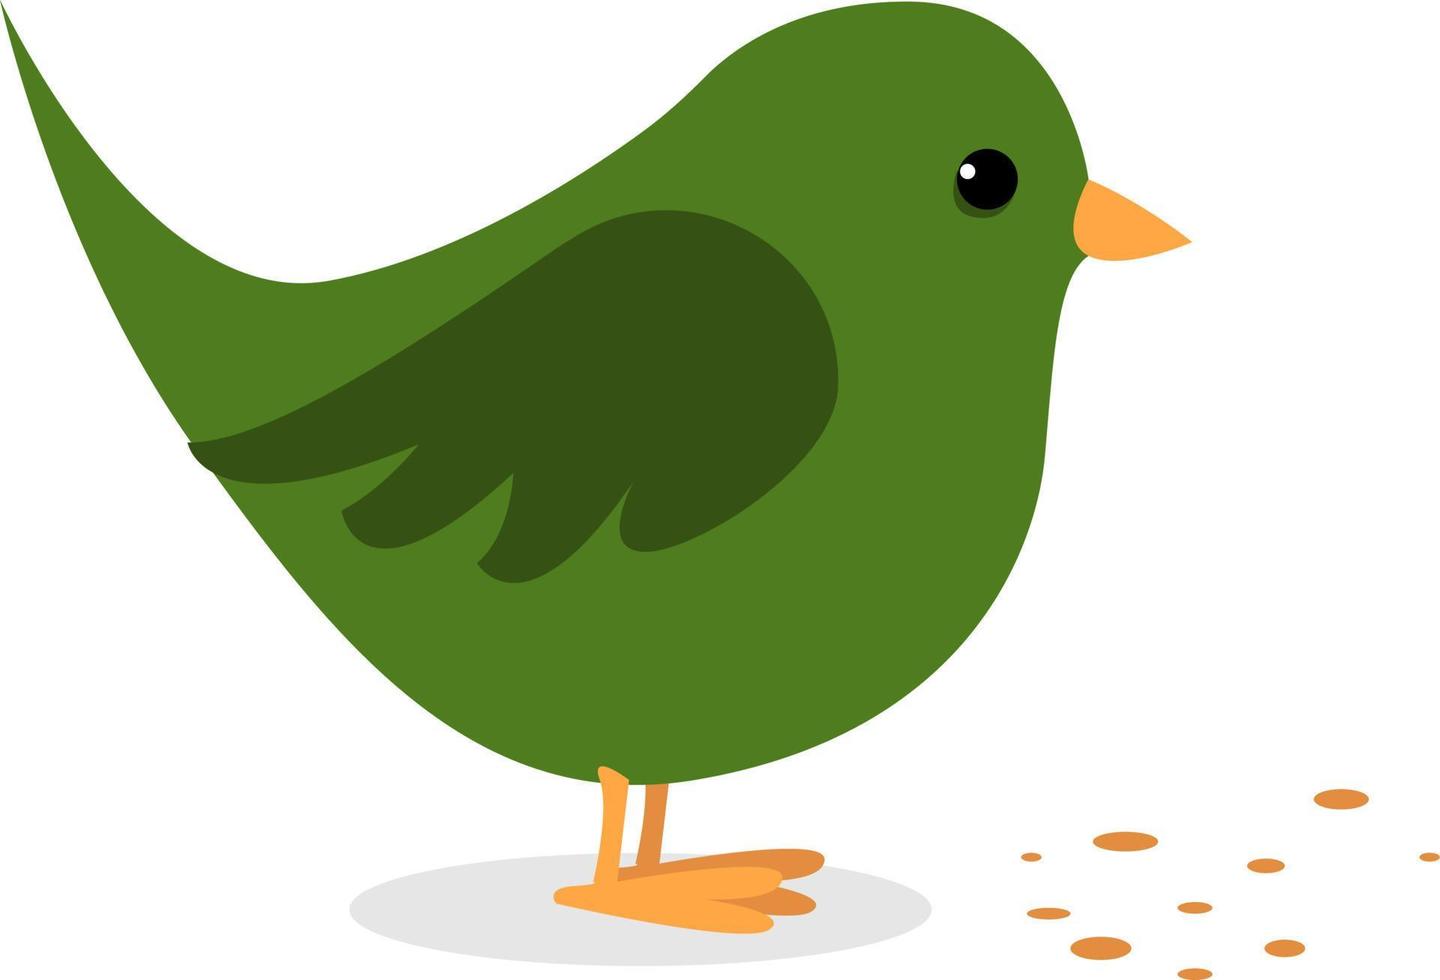 Green bird, illustration, vector on white background.